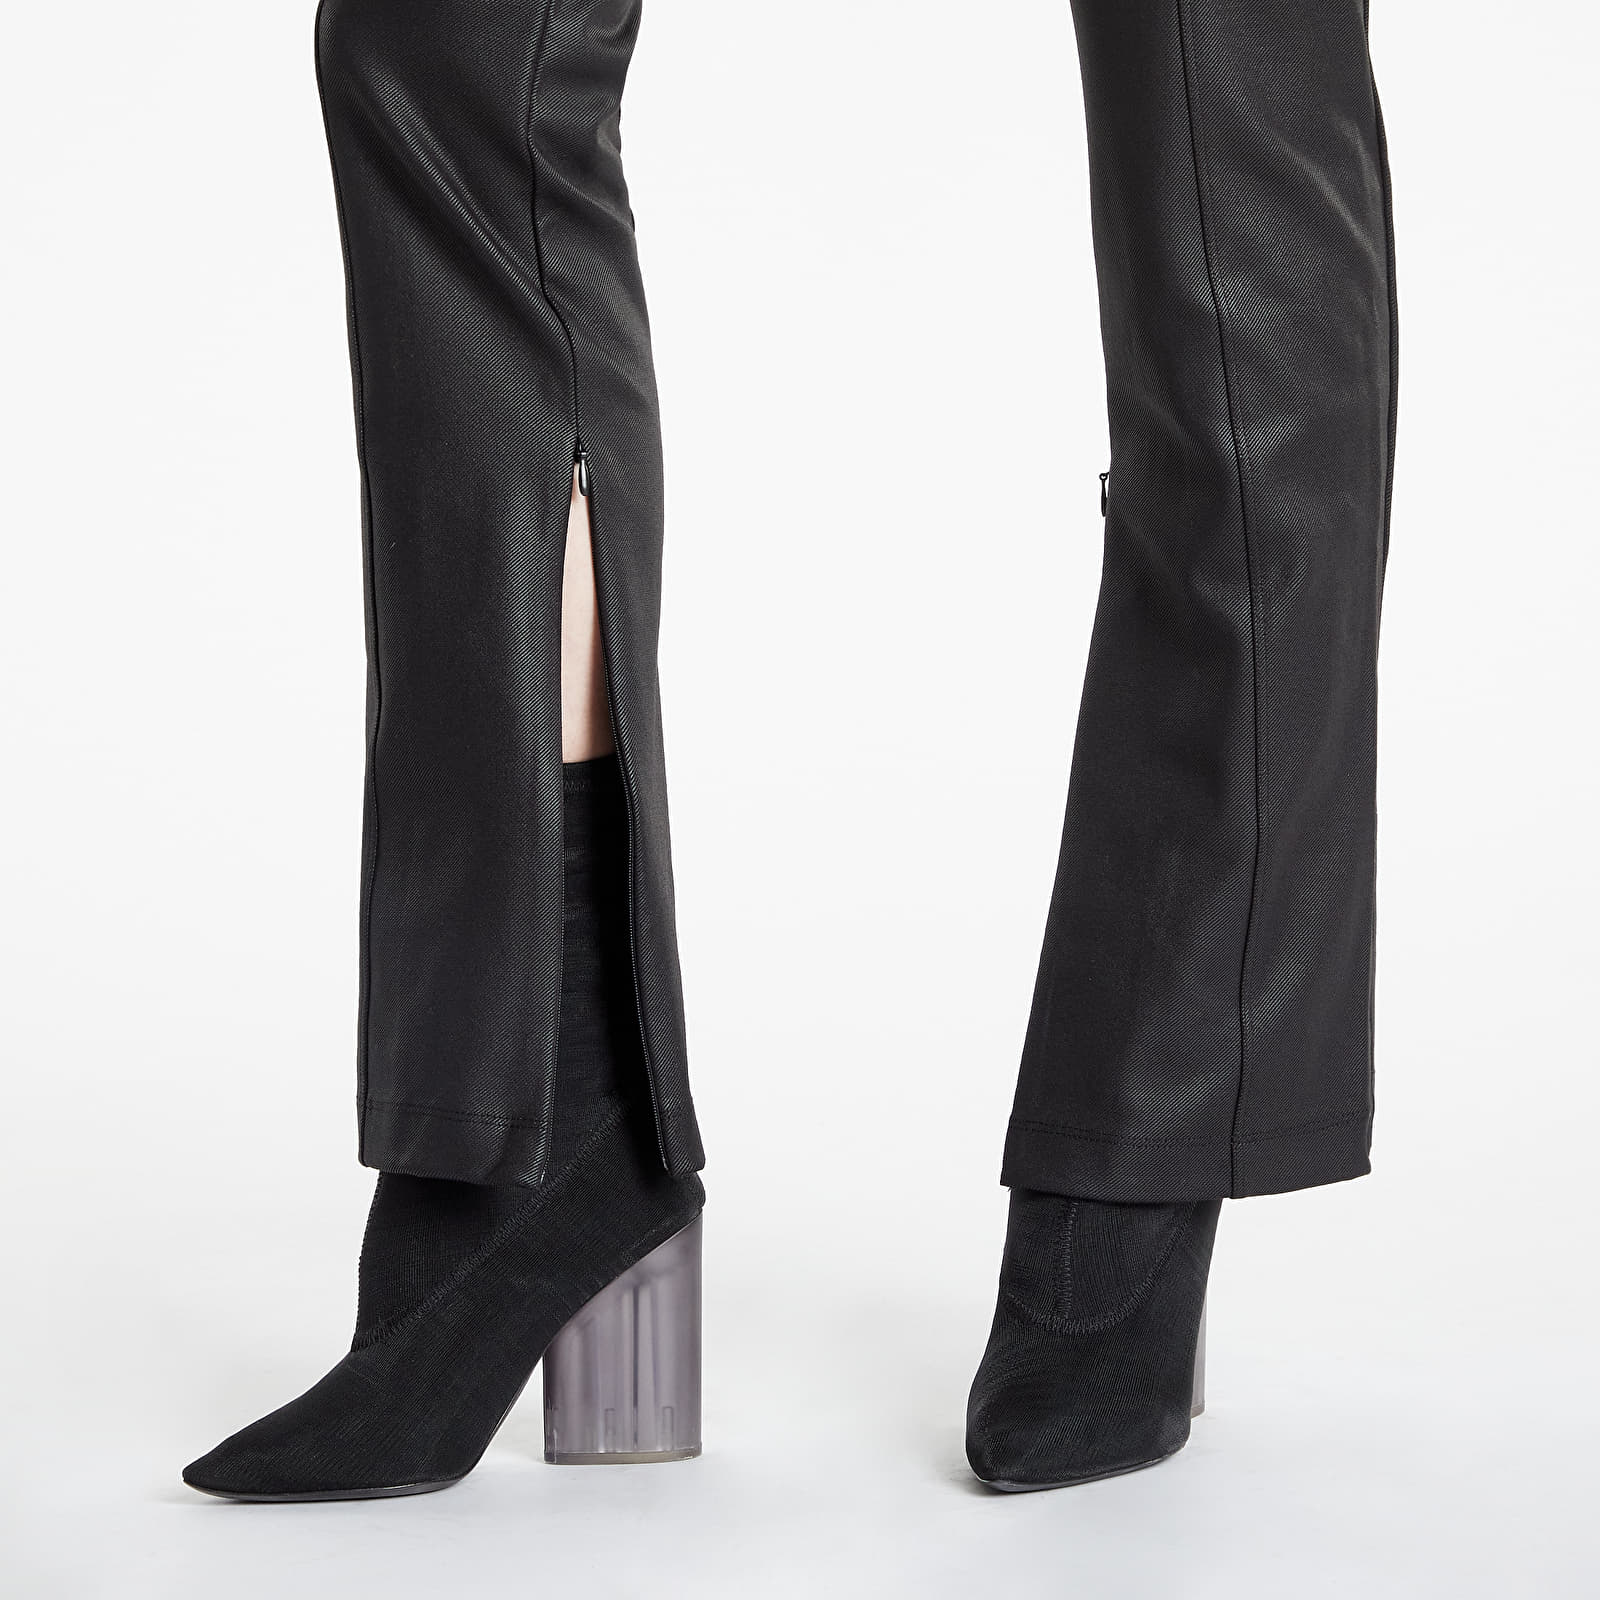 jeans Split Pants | Calvin Milano Ck Coated and Black Pant Klein Footshop Jeans